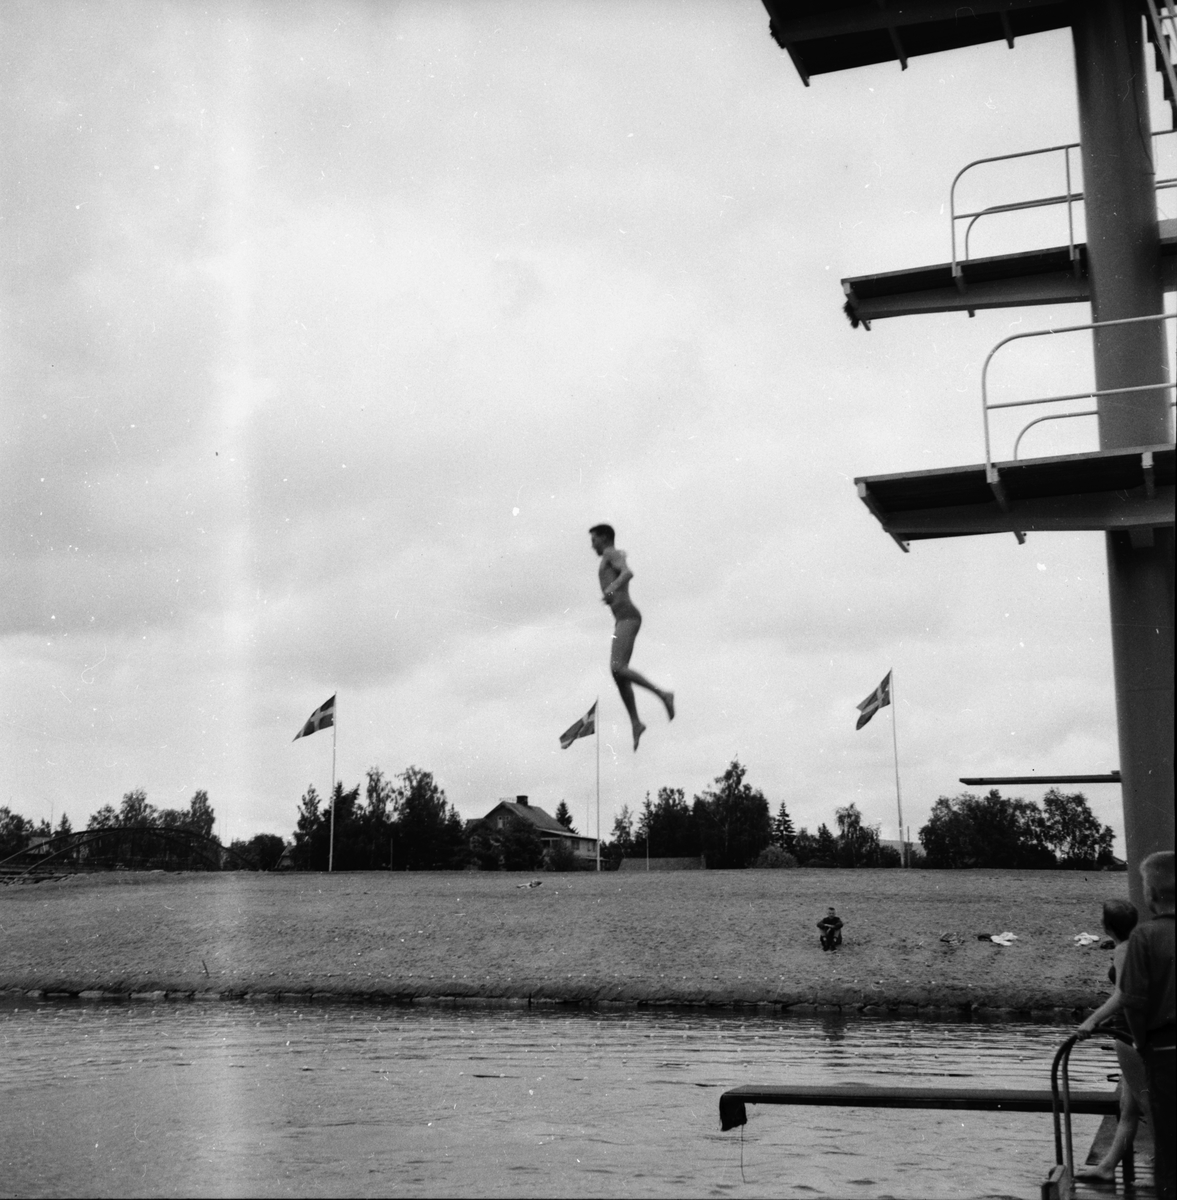 Karlslundsbad simhoppare.
Bollnäs 16/8 1958